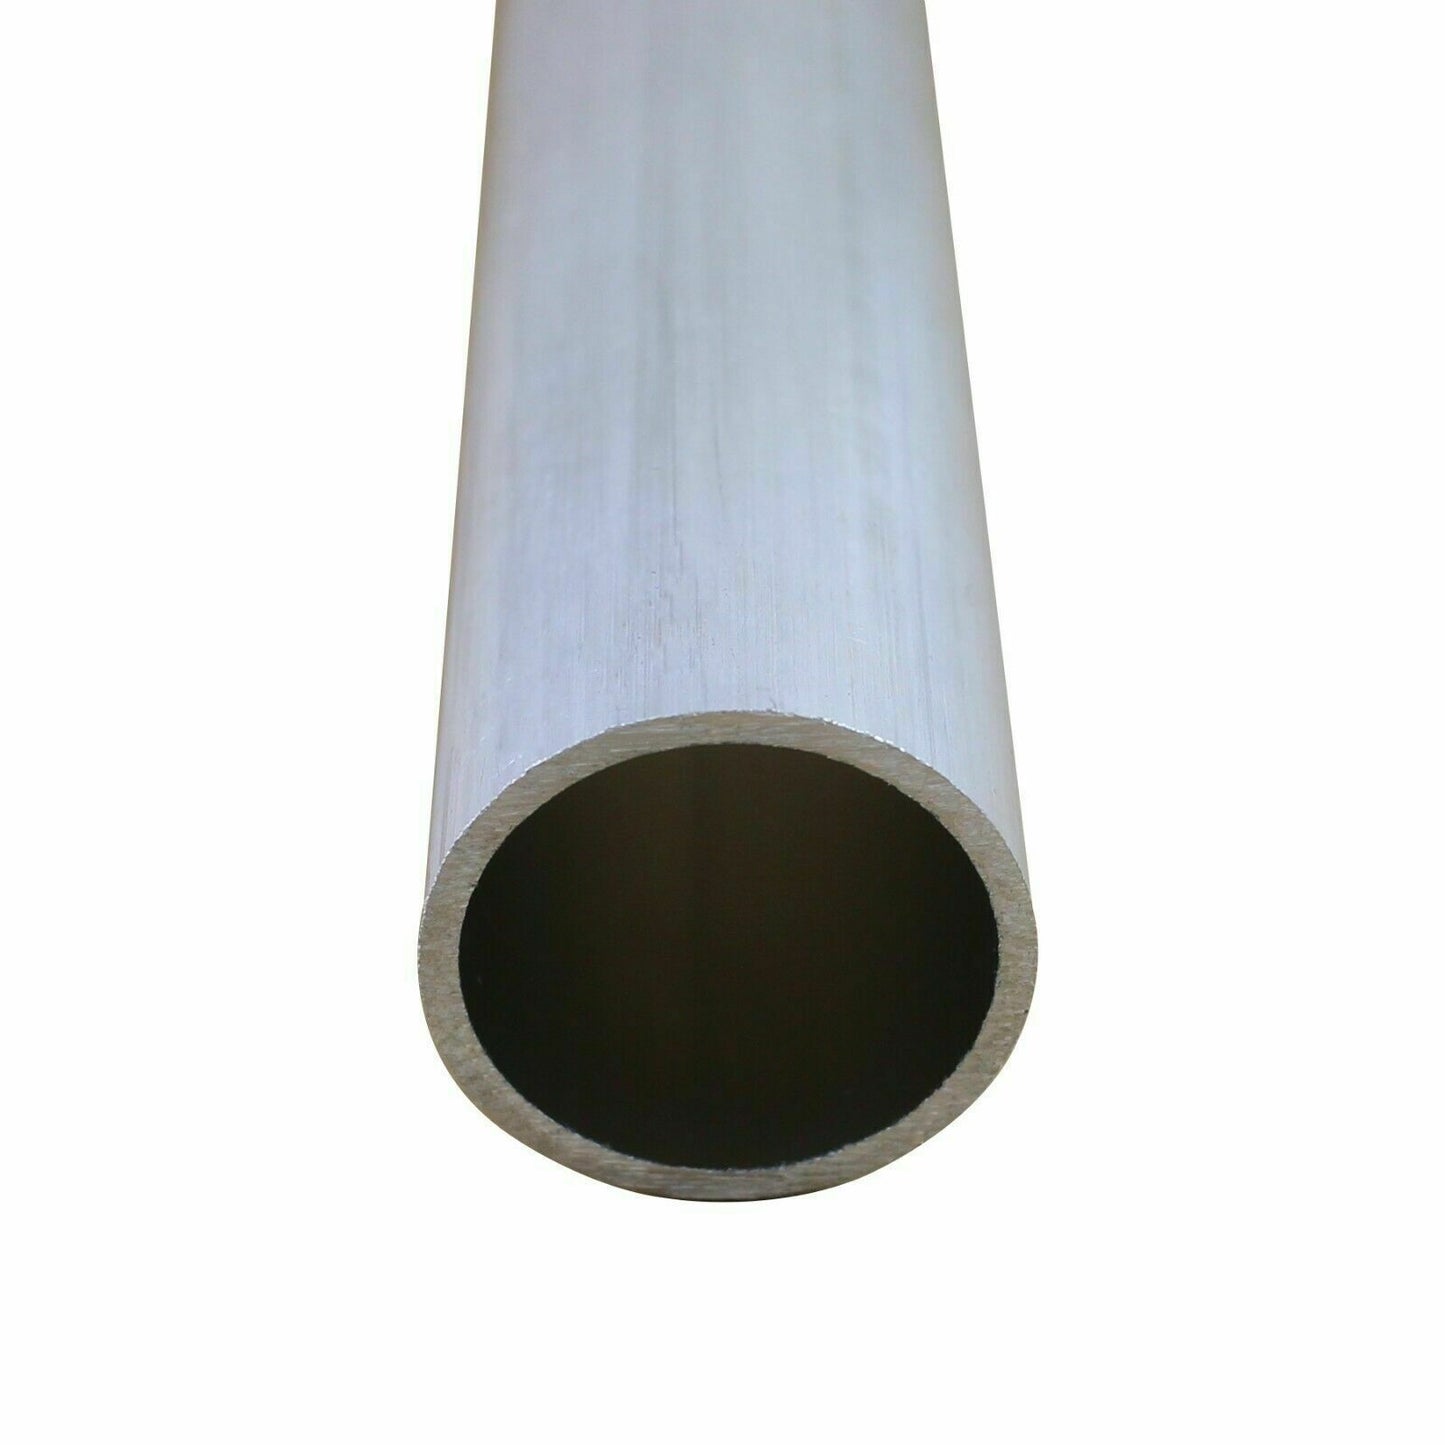 OD 20 mm ID 14 mm 1 pièce Tube rond en aluminium